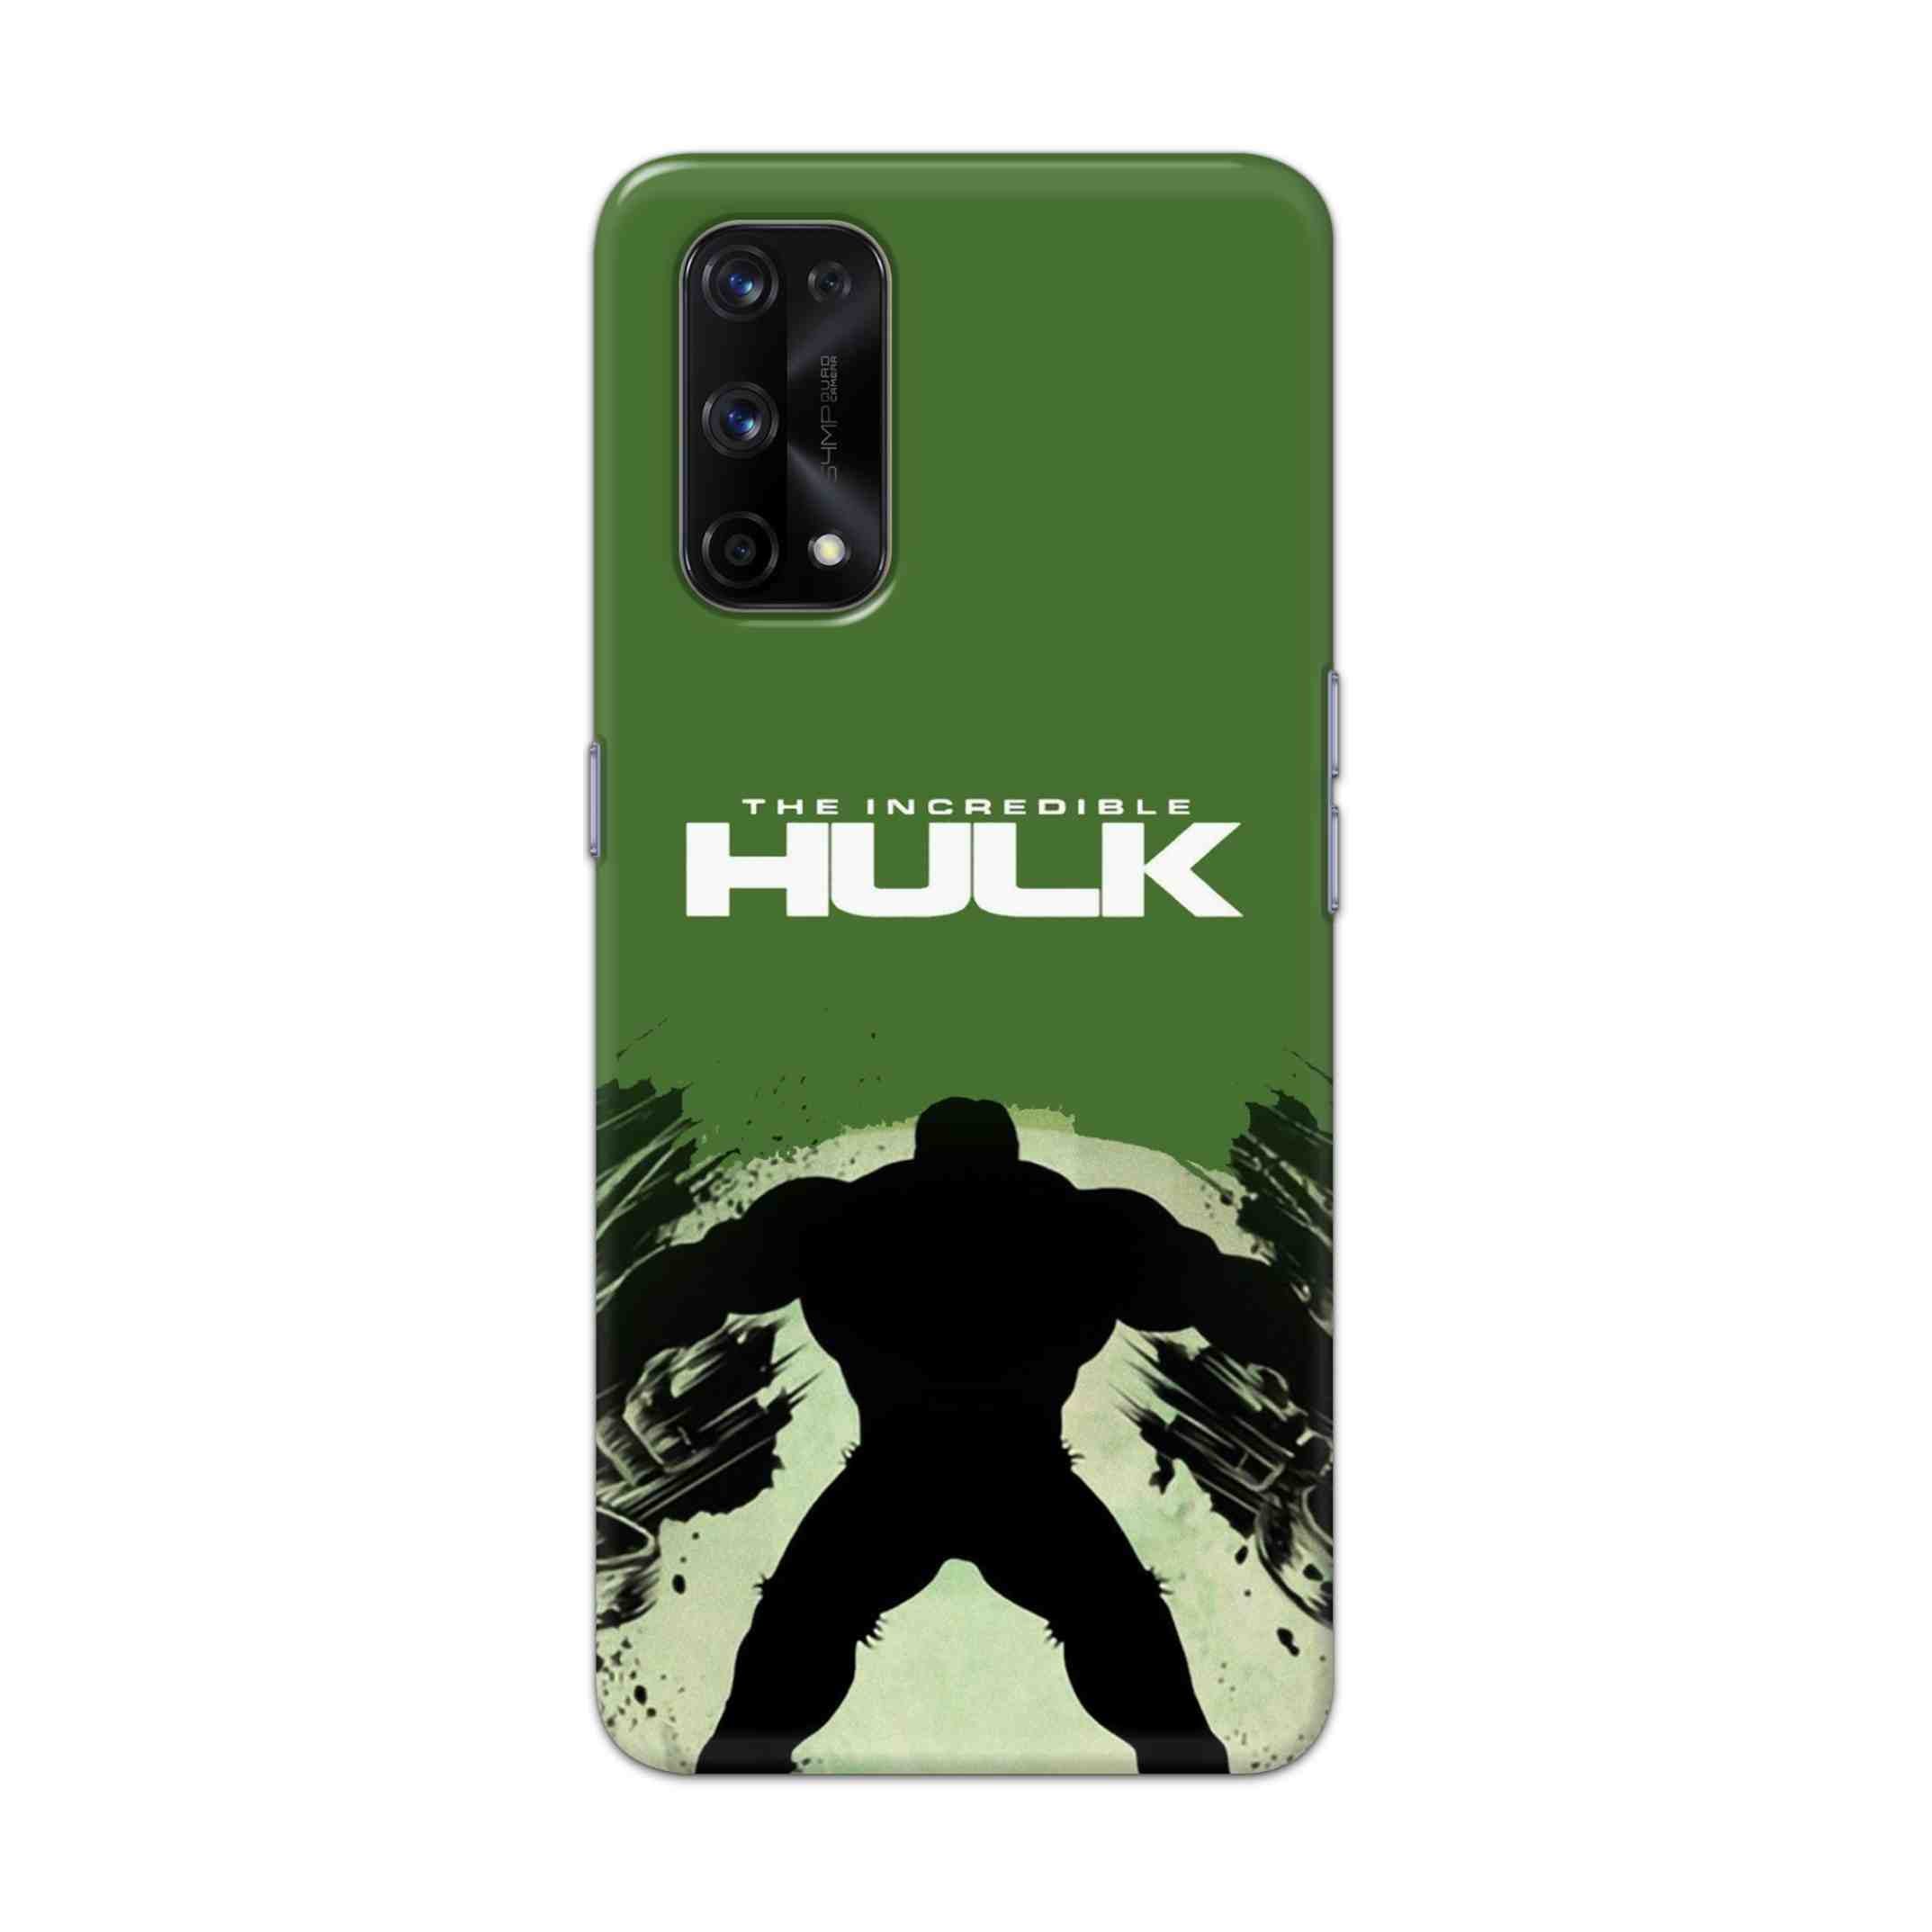 Buy Hulk Hard Back Mobile Phone Case Cover For Realme X7 Pro Online